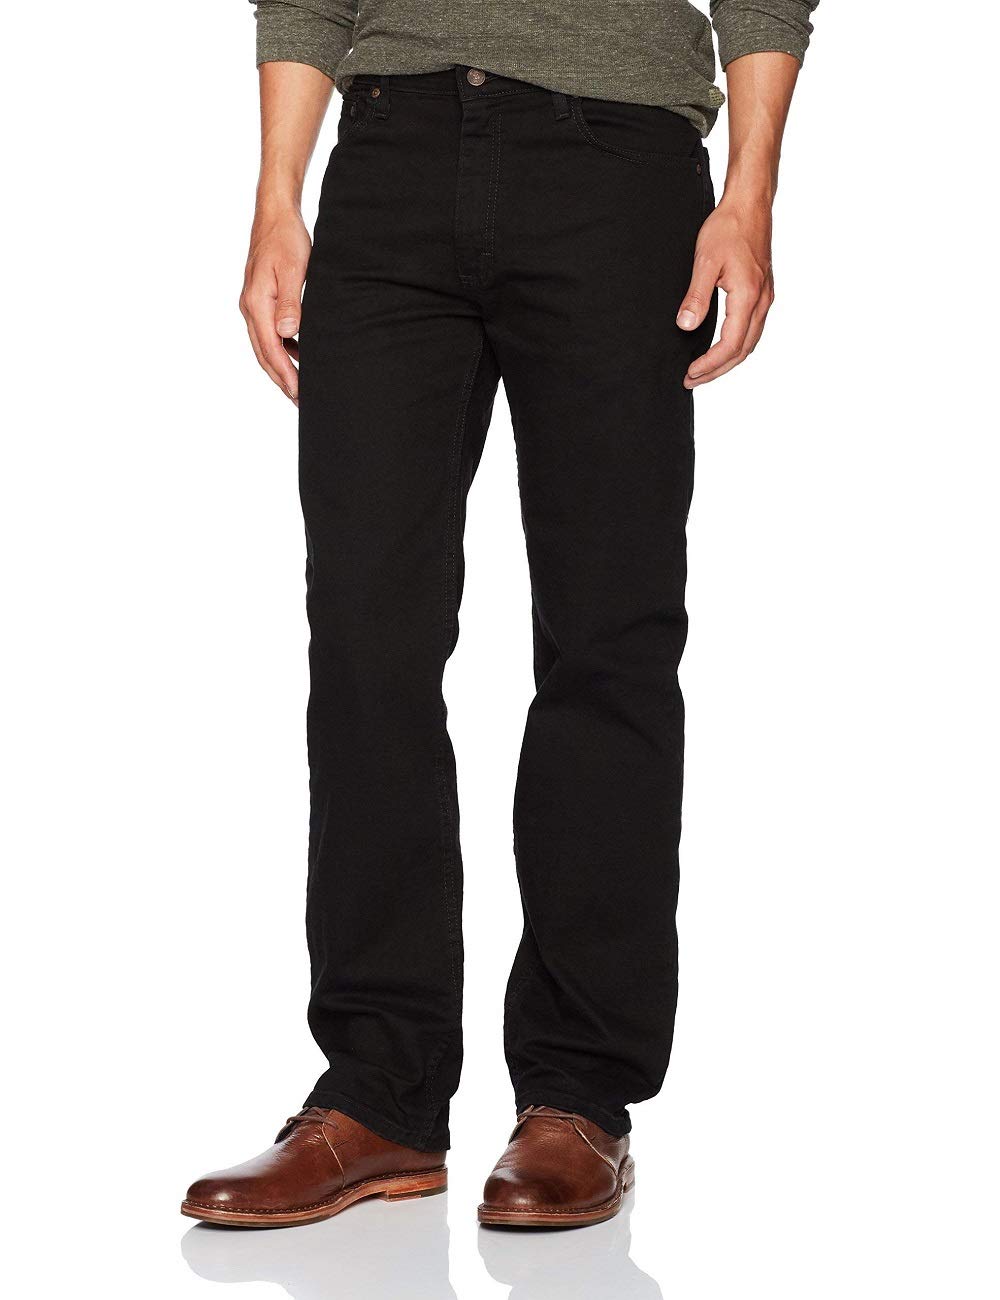 Wrangler Authentics Men's Regular Fit Comfort Flex Waist Jean, Black, 40W x 34L